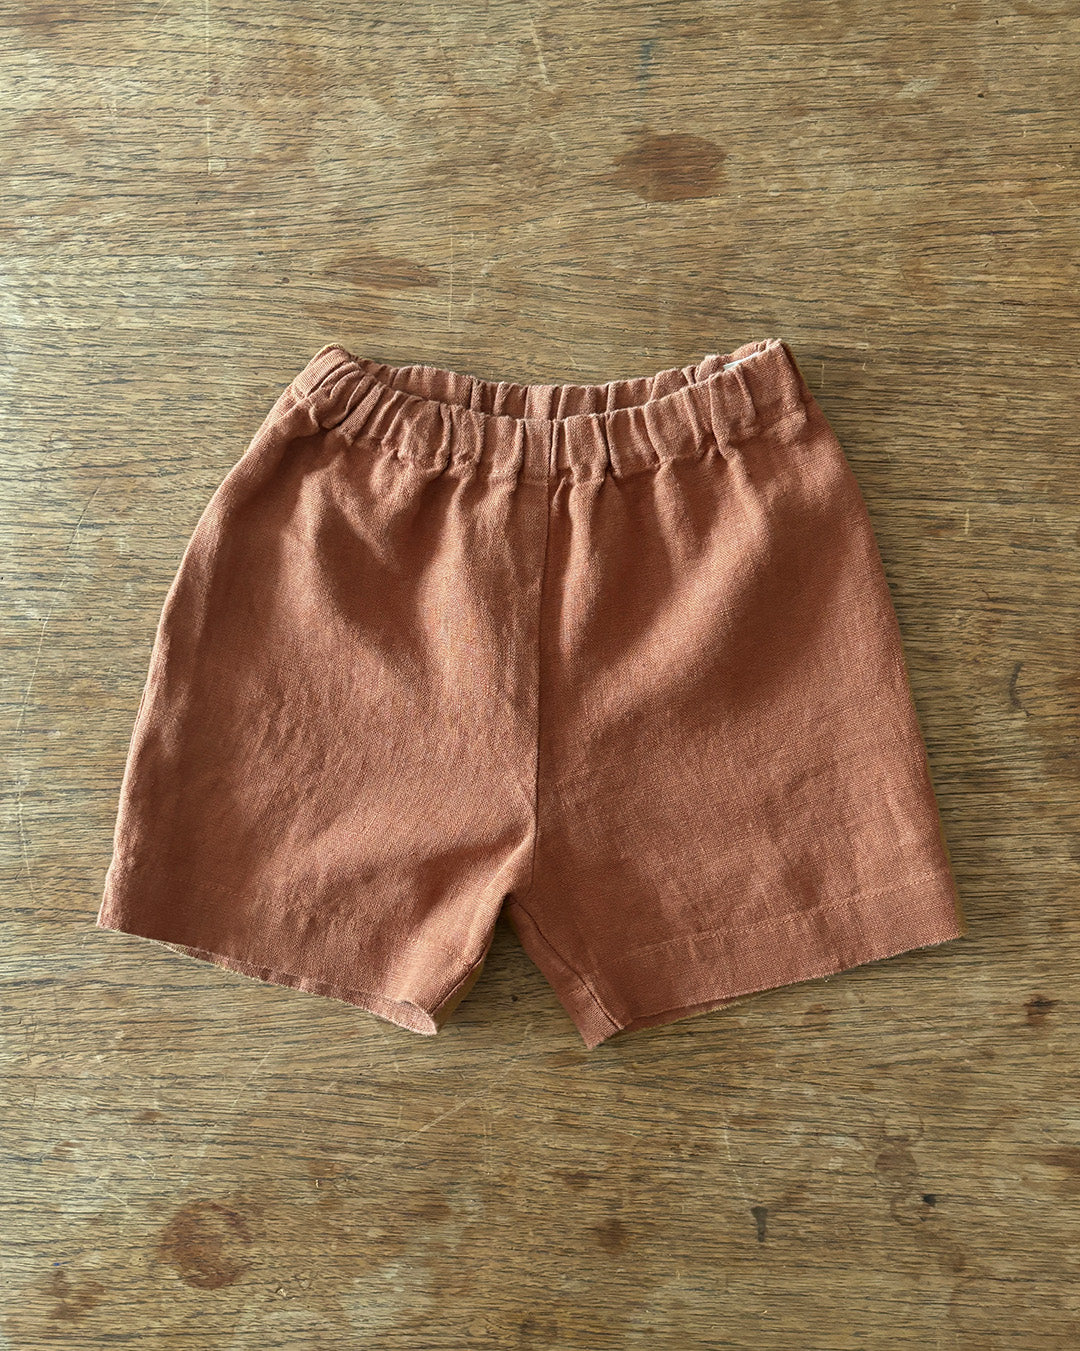 100% linen kids shorts in cinnamon